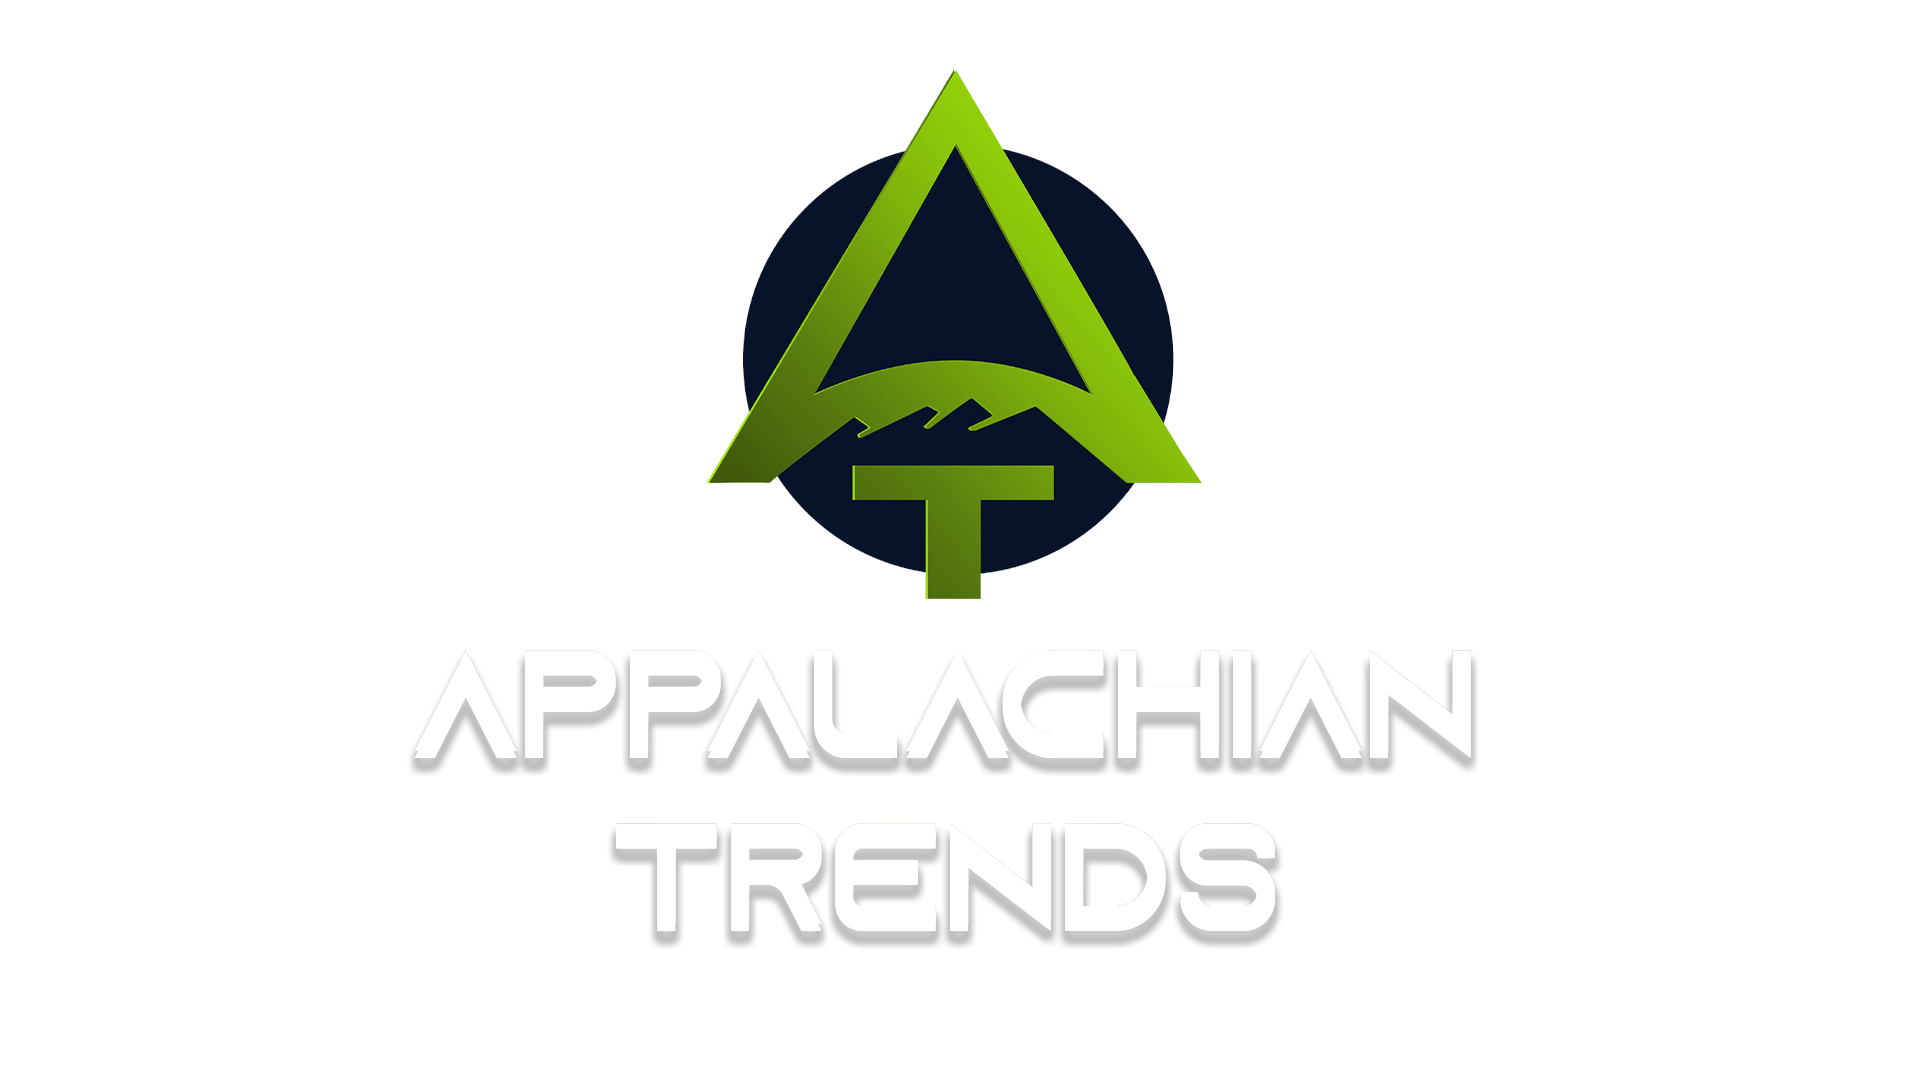 Appalachian Trends  - Marketing Media